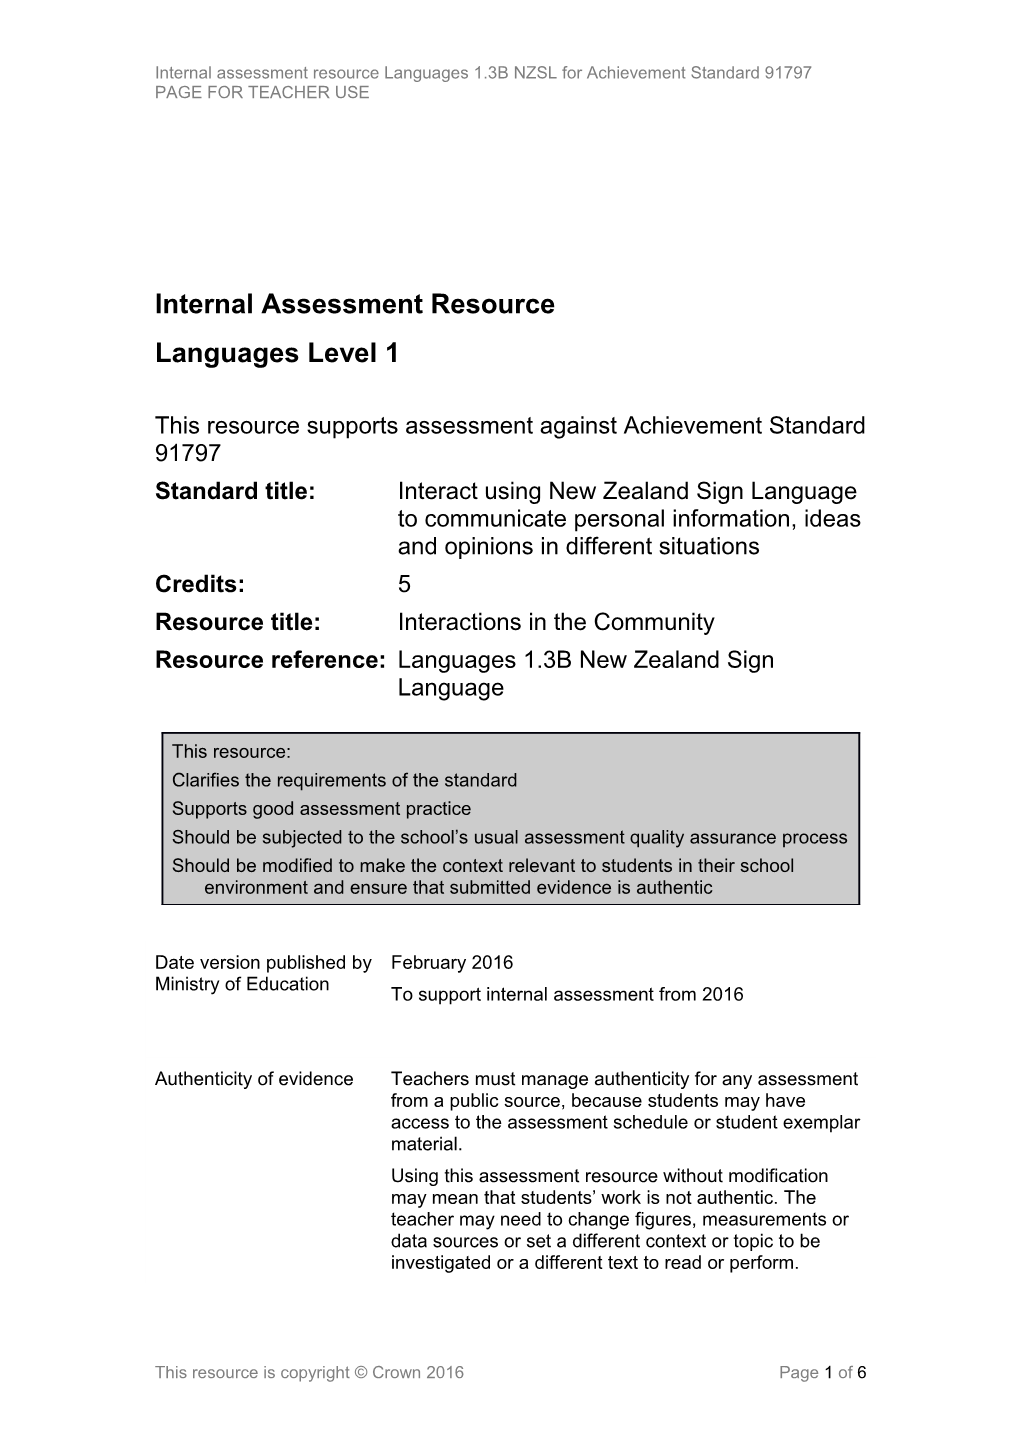 Level 1 Languages Internal Assessment Resource